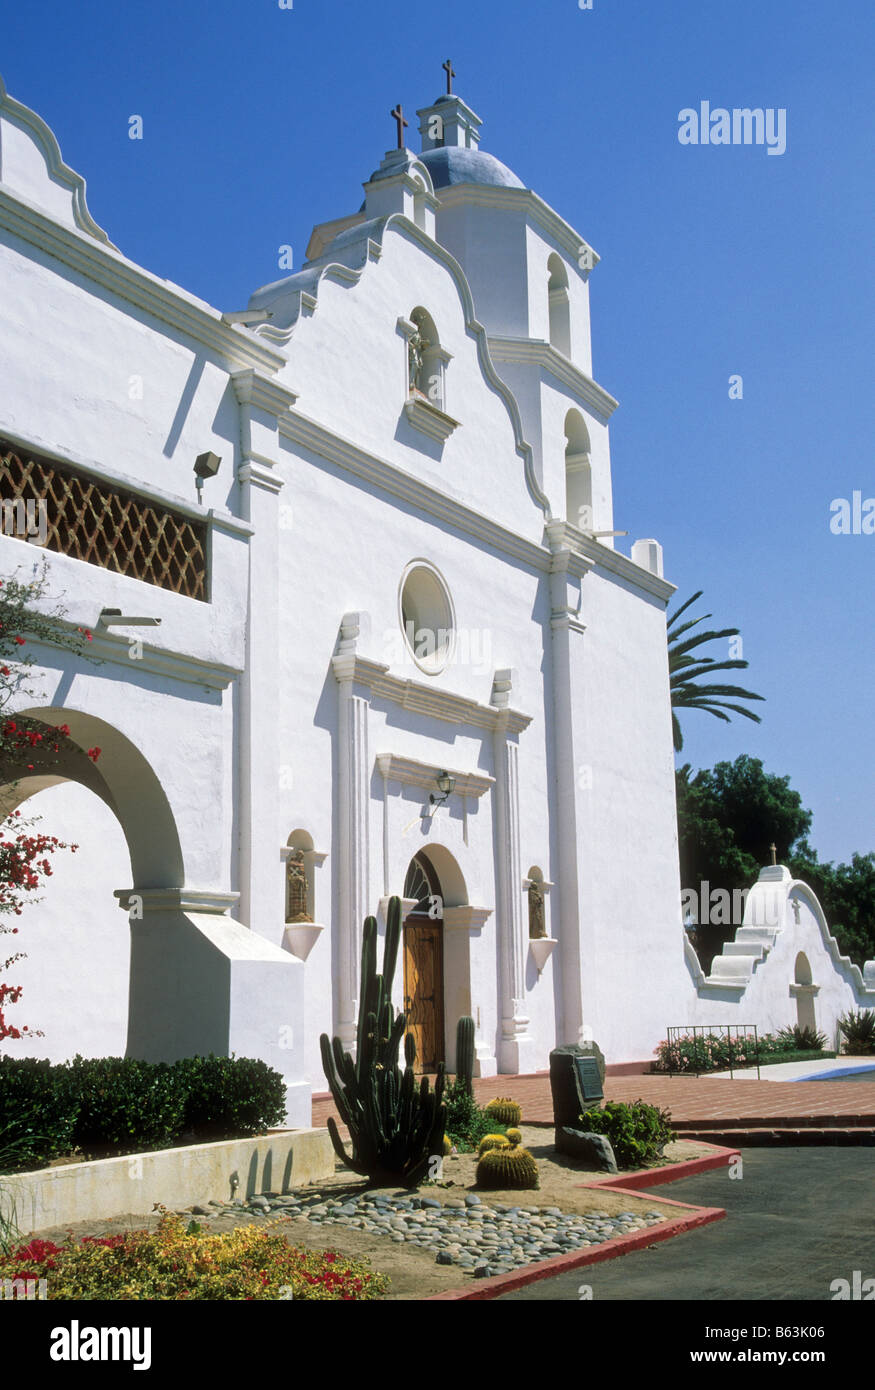 California Mission Santa Ynez near Solvang, California. Stock Photo